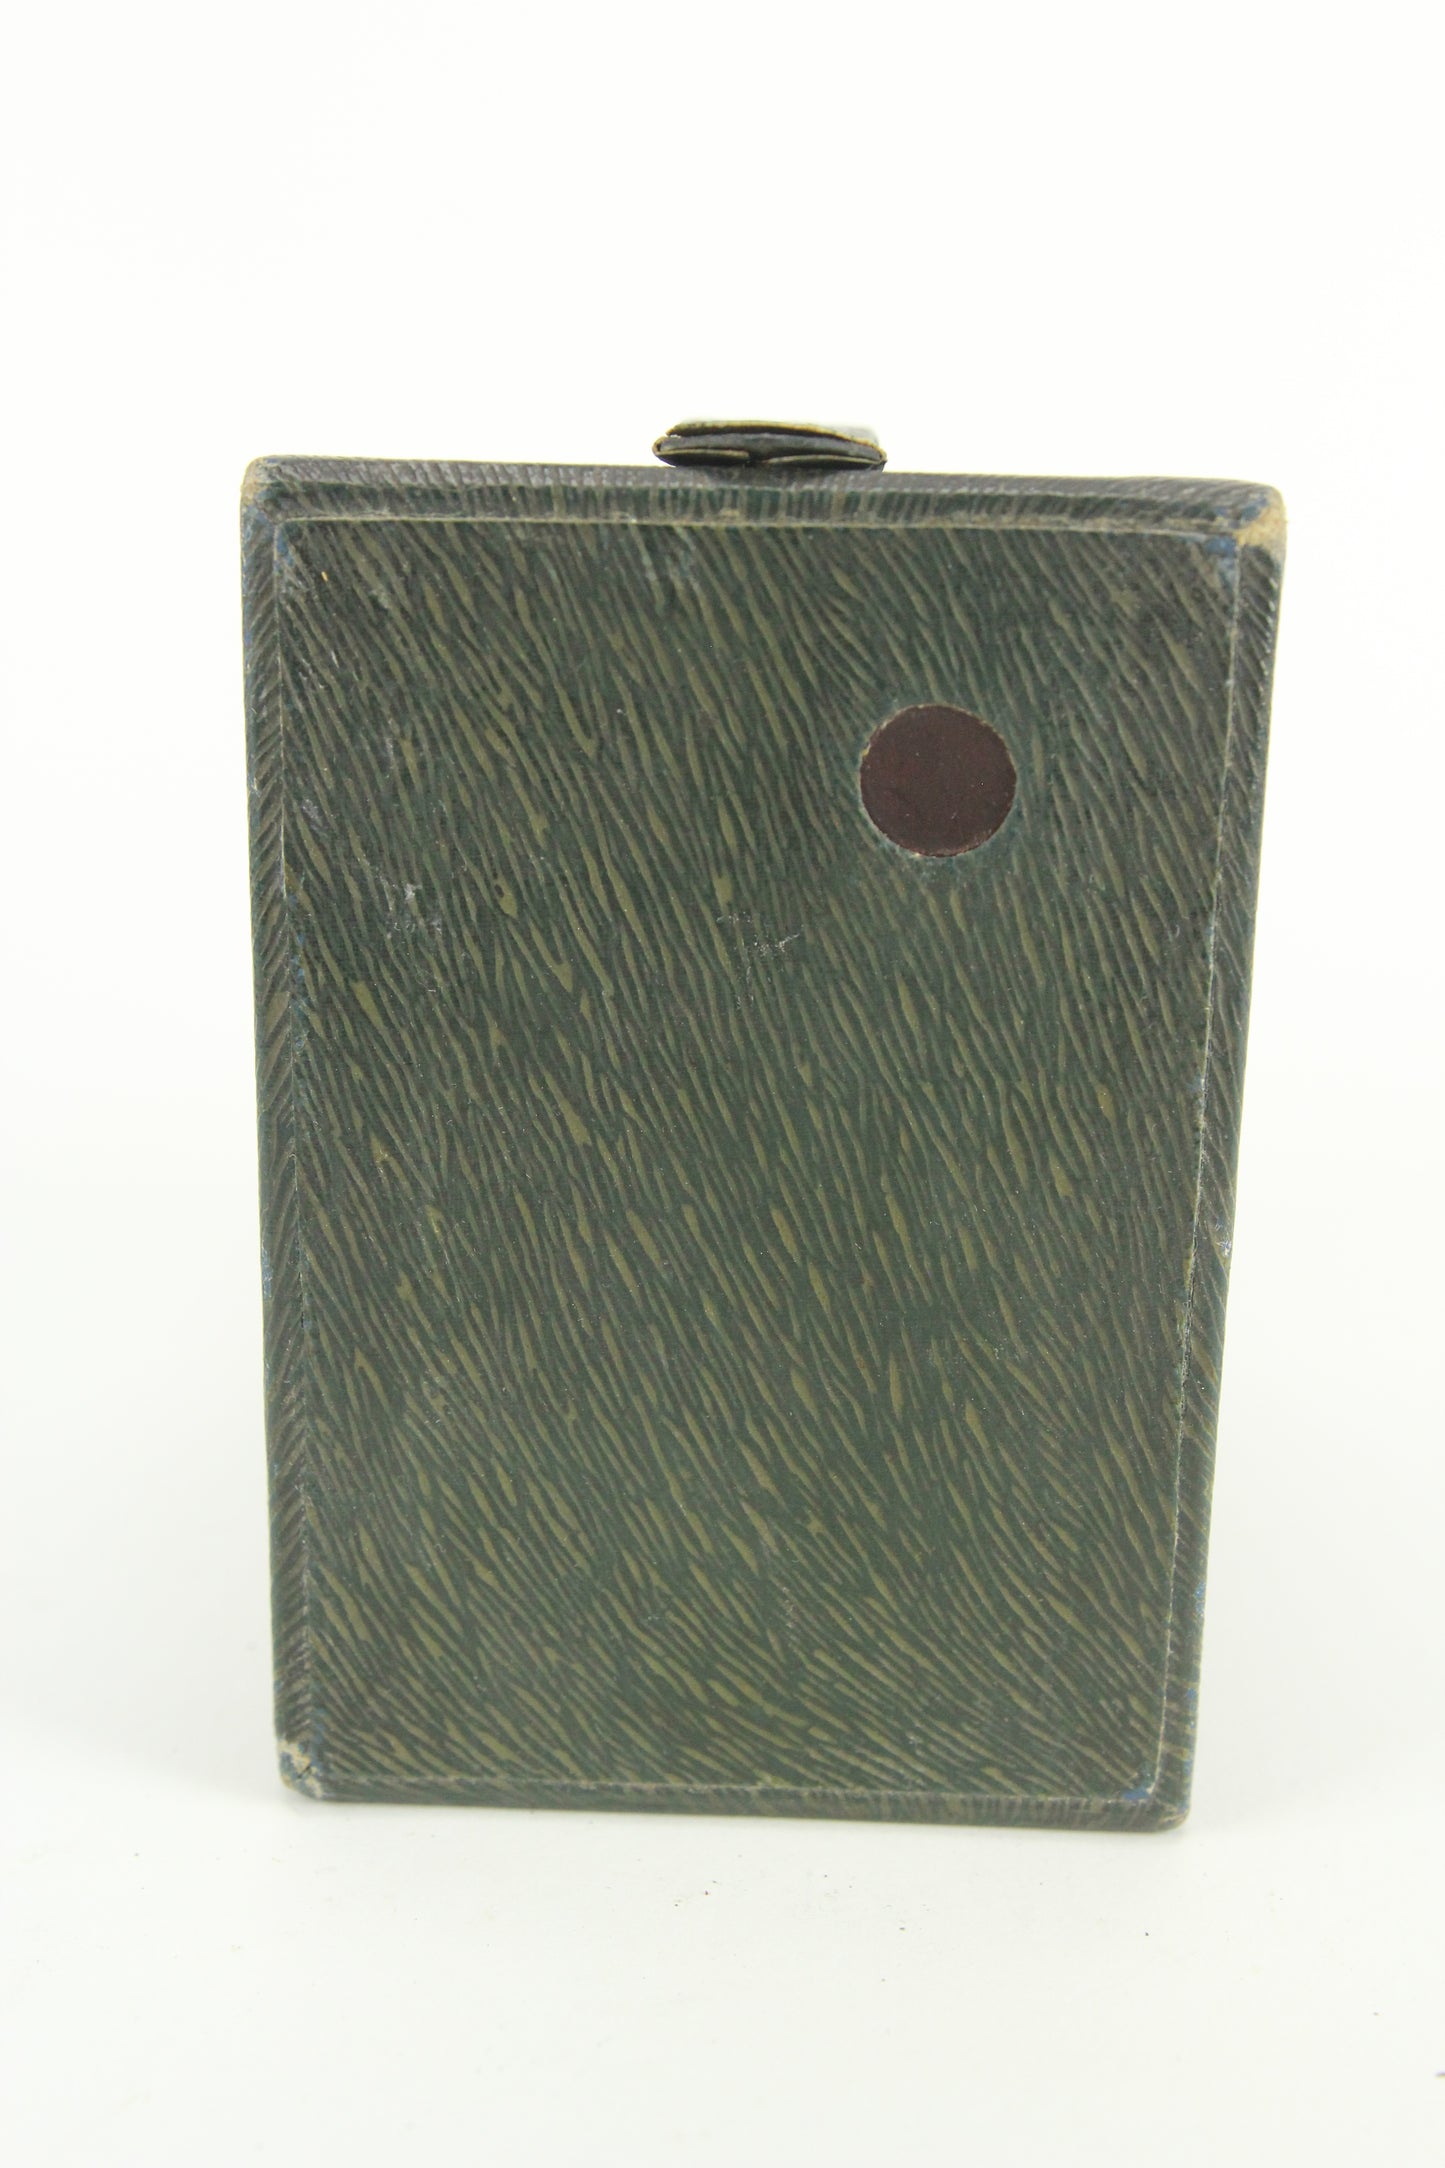 Eastman Kodak Rainbow Hawk-Eye No. 2 Model C Box Camera (Green Color)